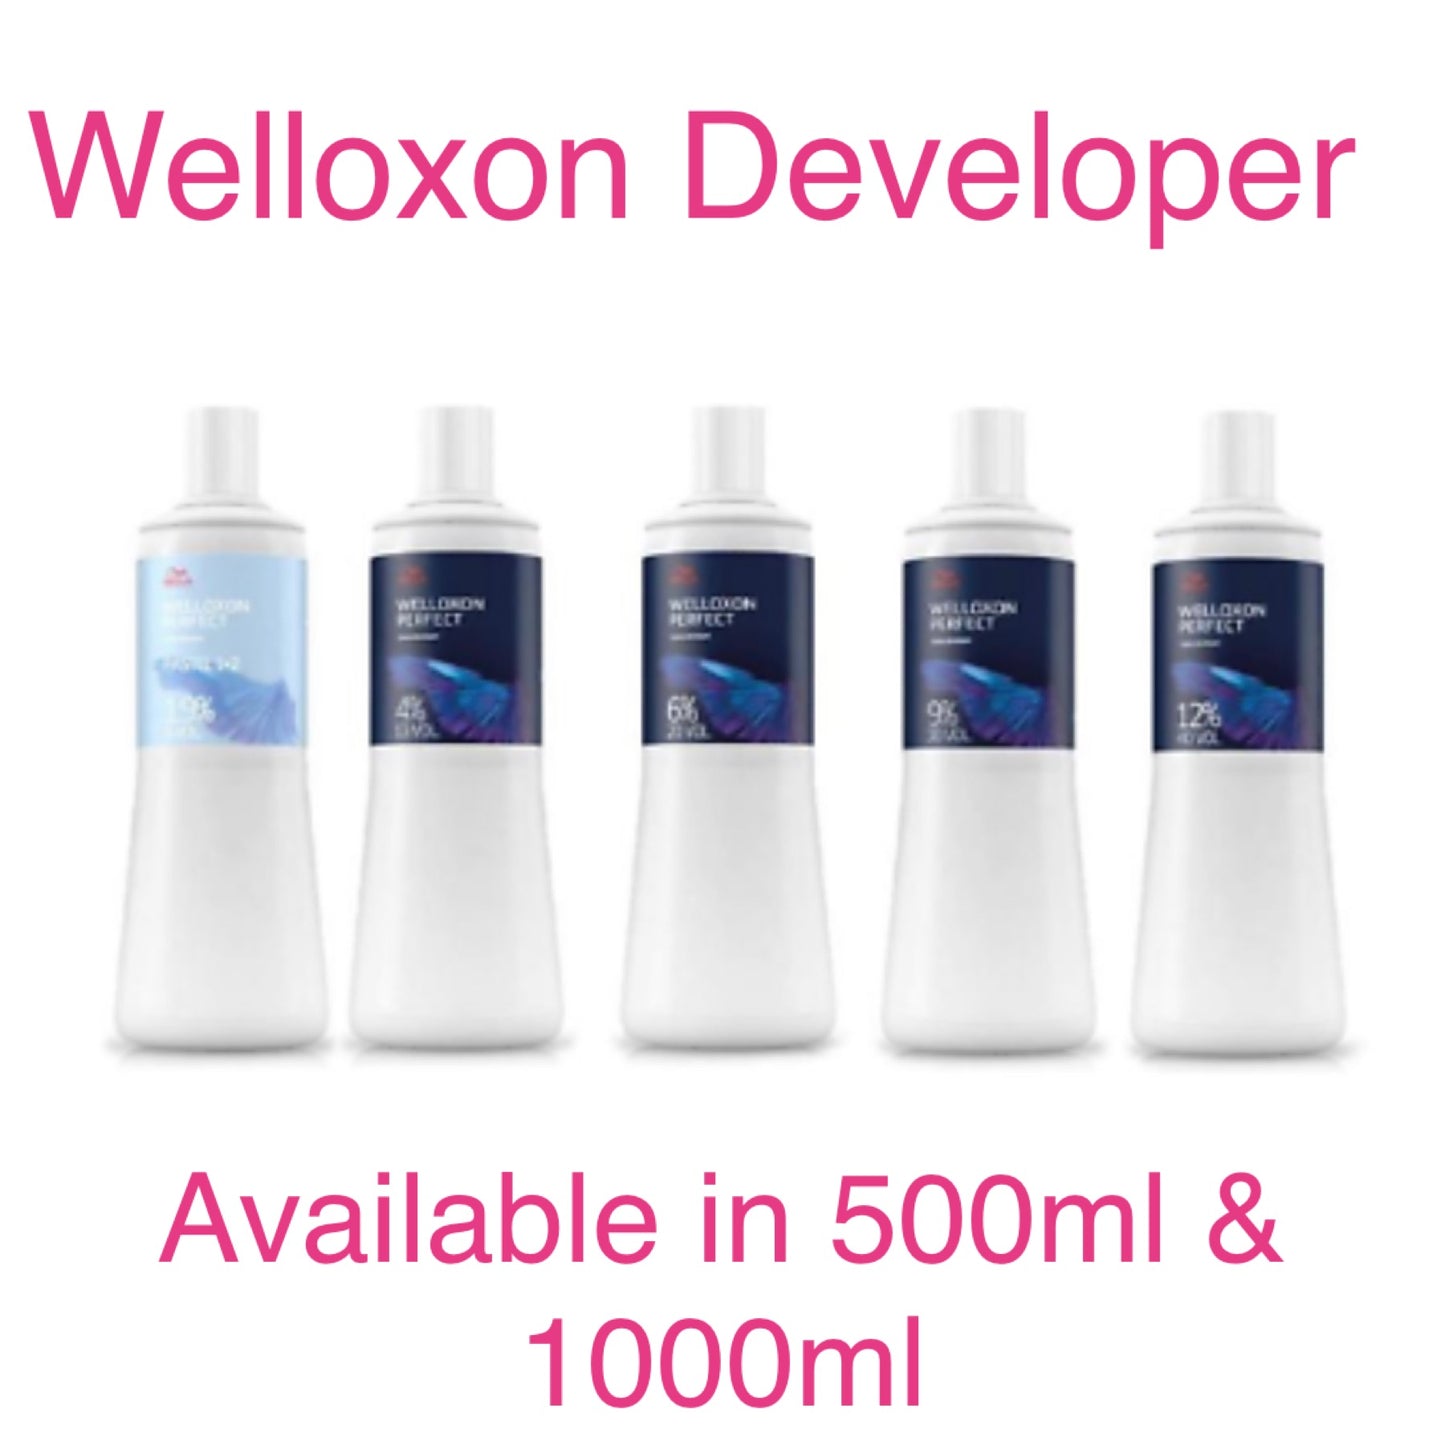 Wella Welloxon Developer 500ml -£7.99 1000ml -£12.99